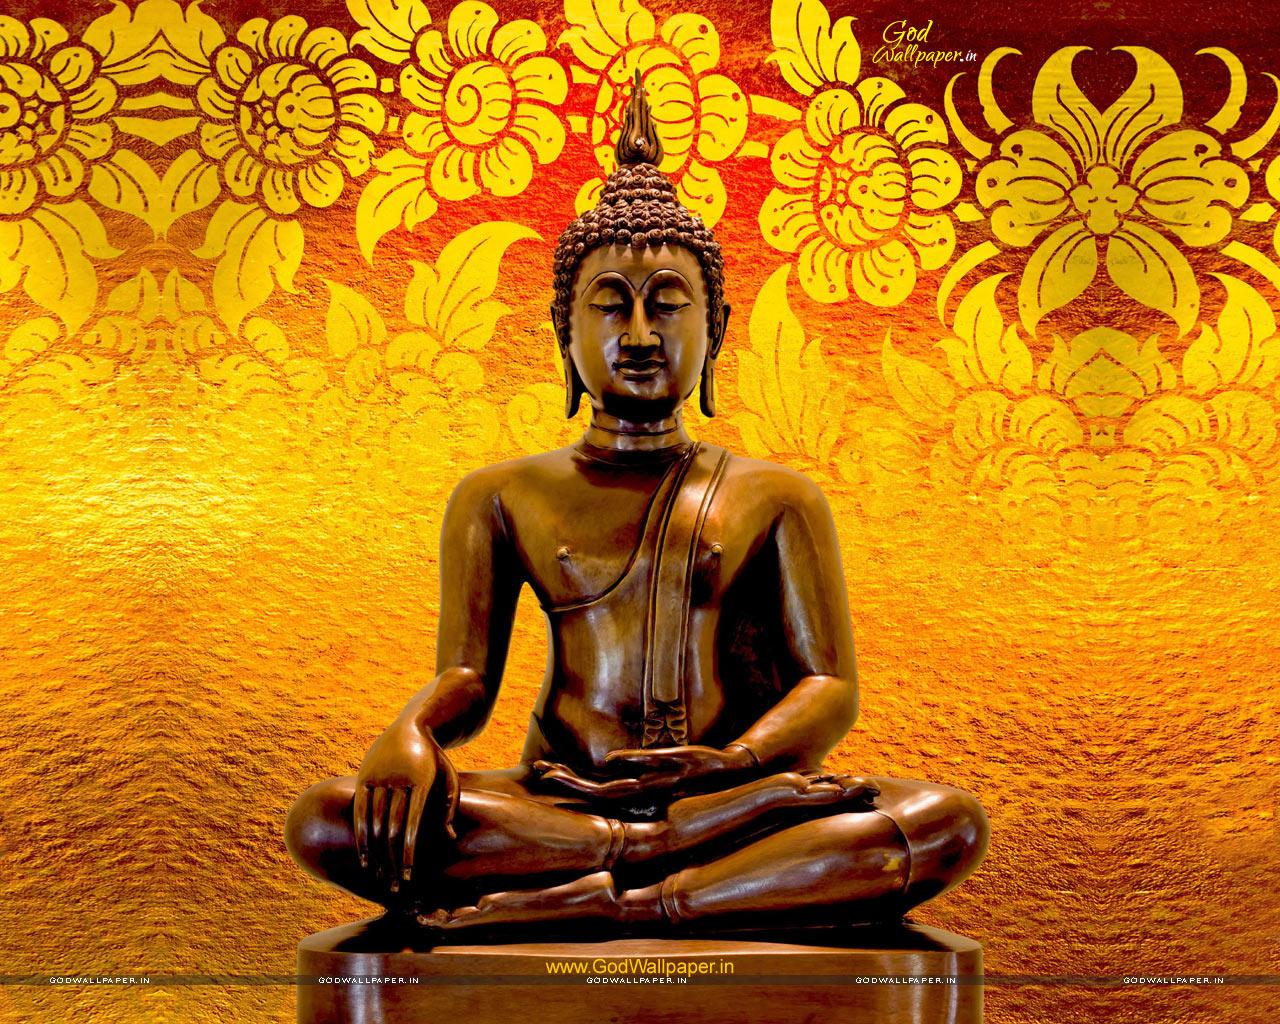 Buddha Bhagwan Wallpaper Hd - carrotapp